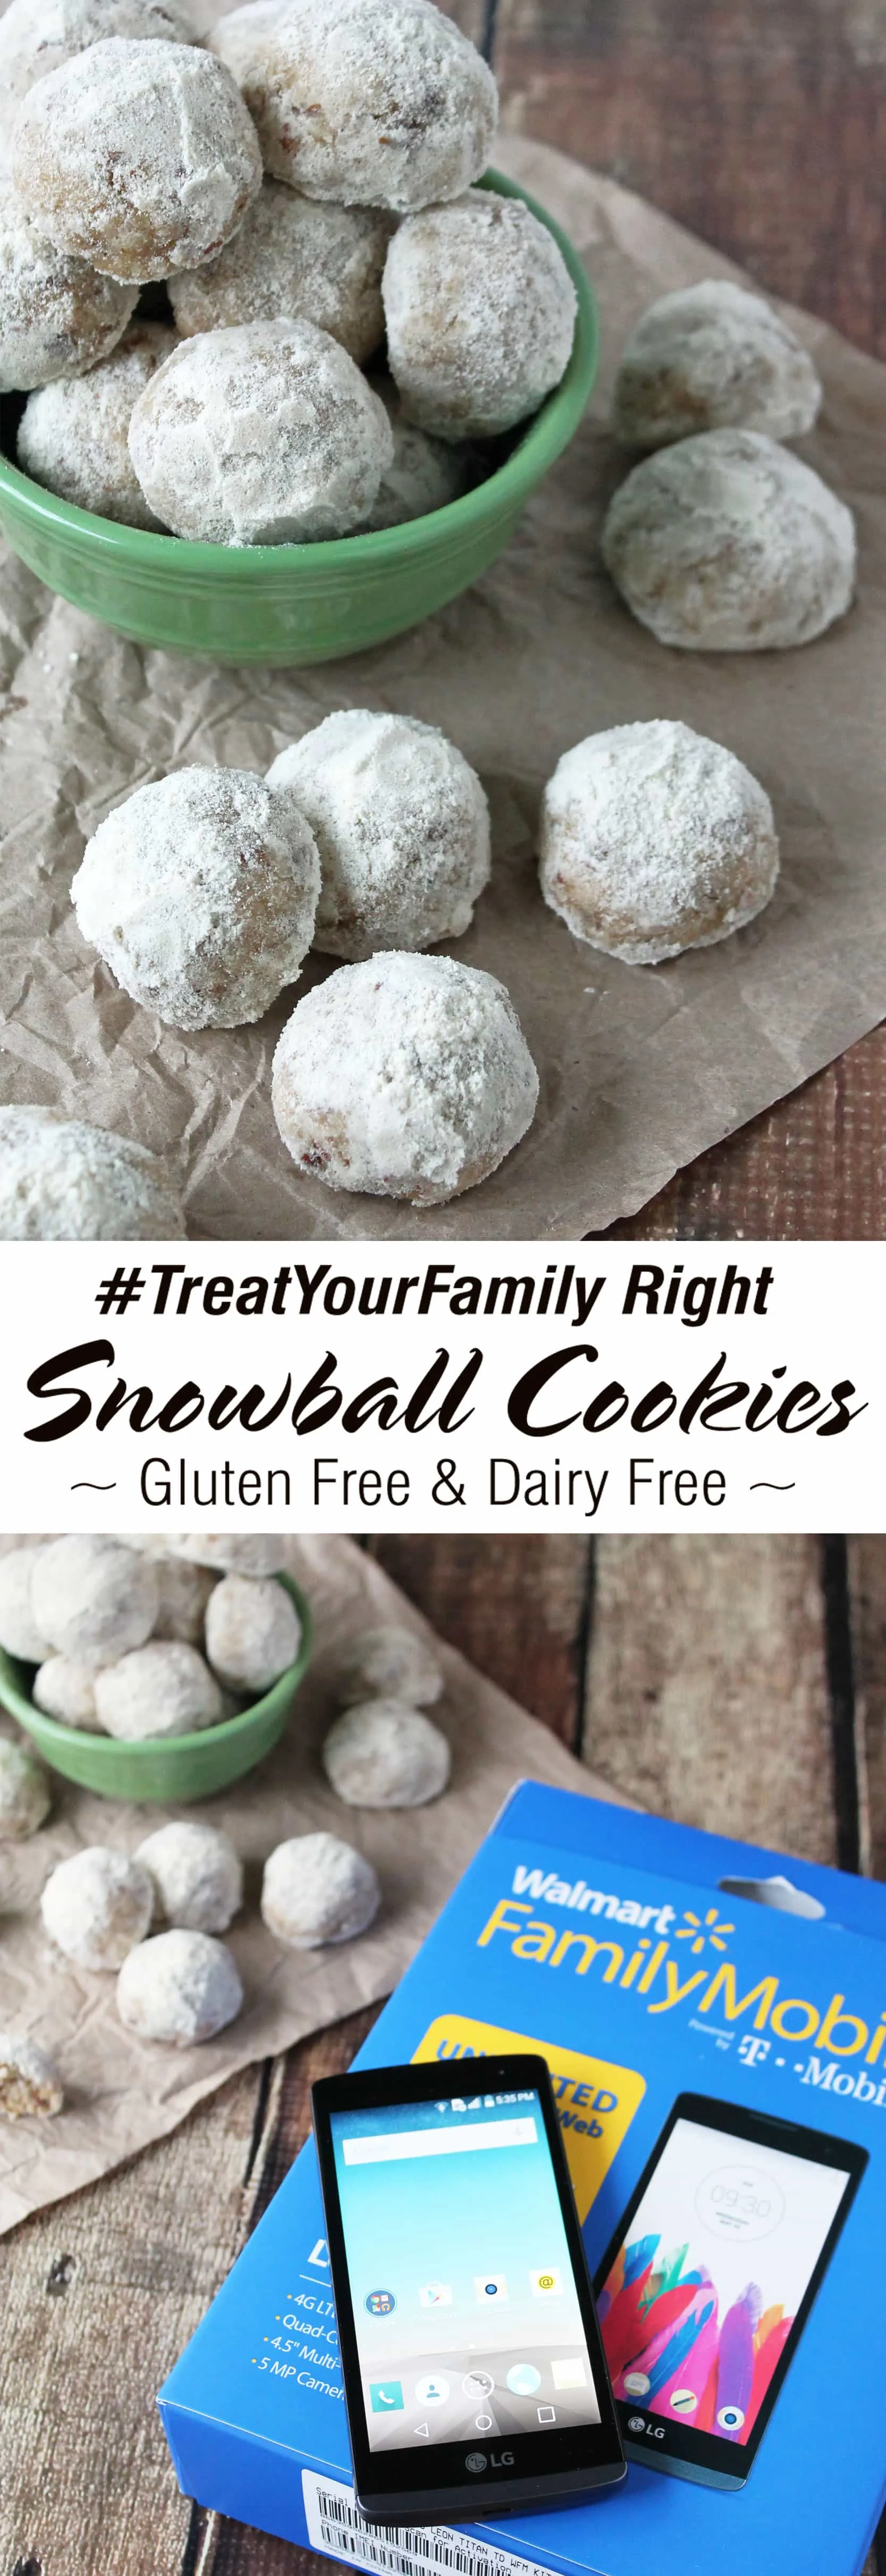 #TreatYourFamily-Right-Snowball-Cookies